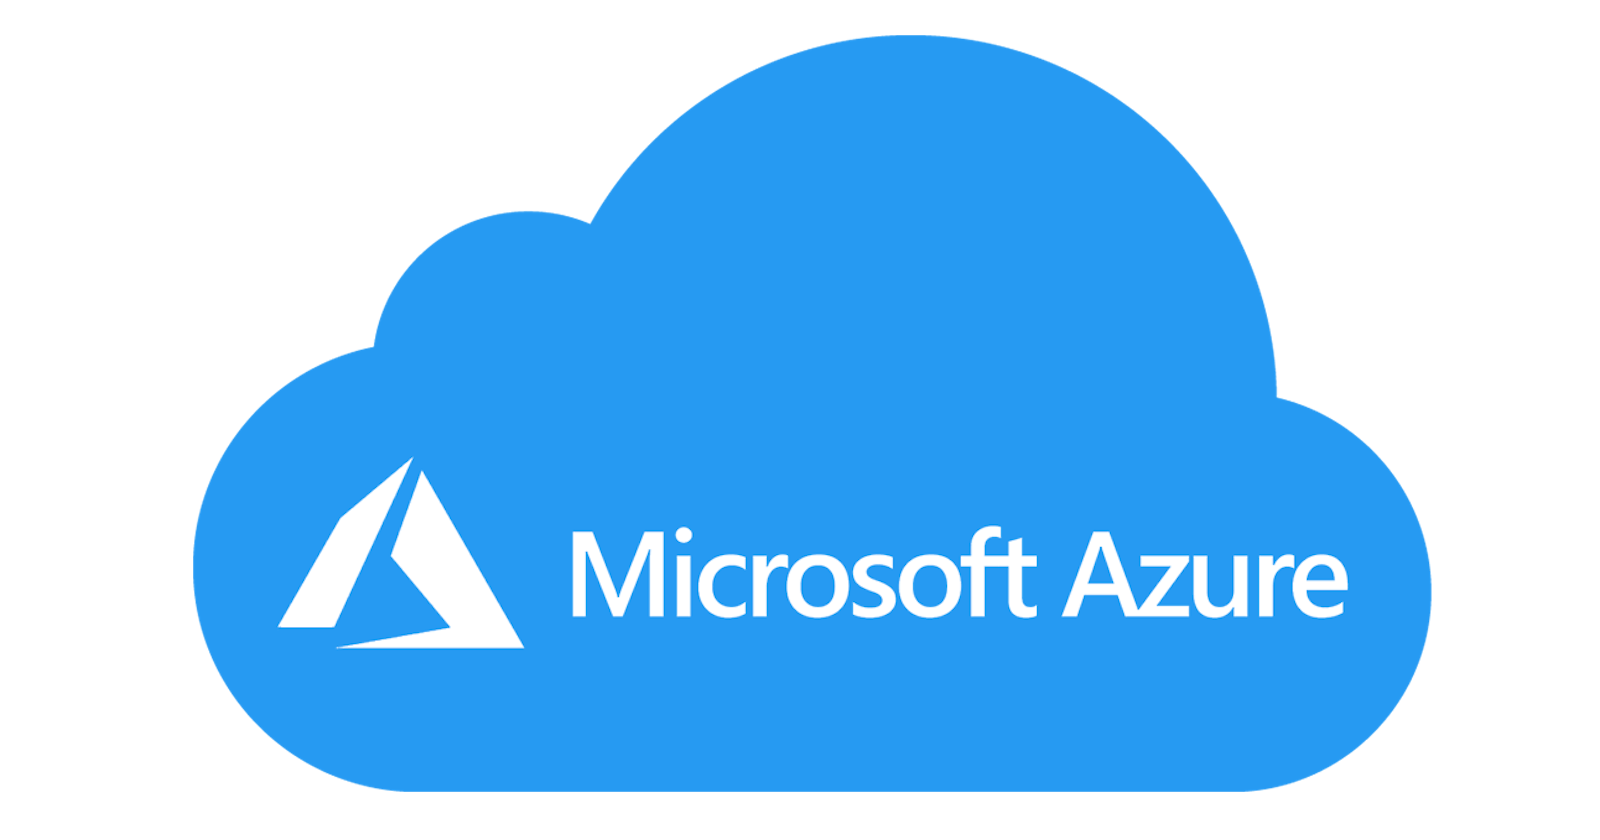 Activating Hyper-V on a Microsoft Azure Virtual Machine